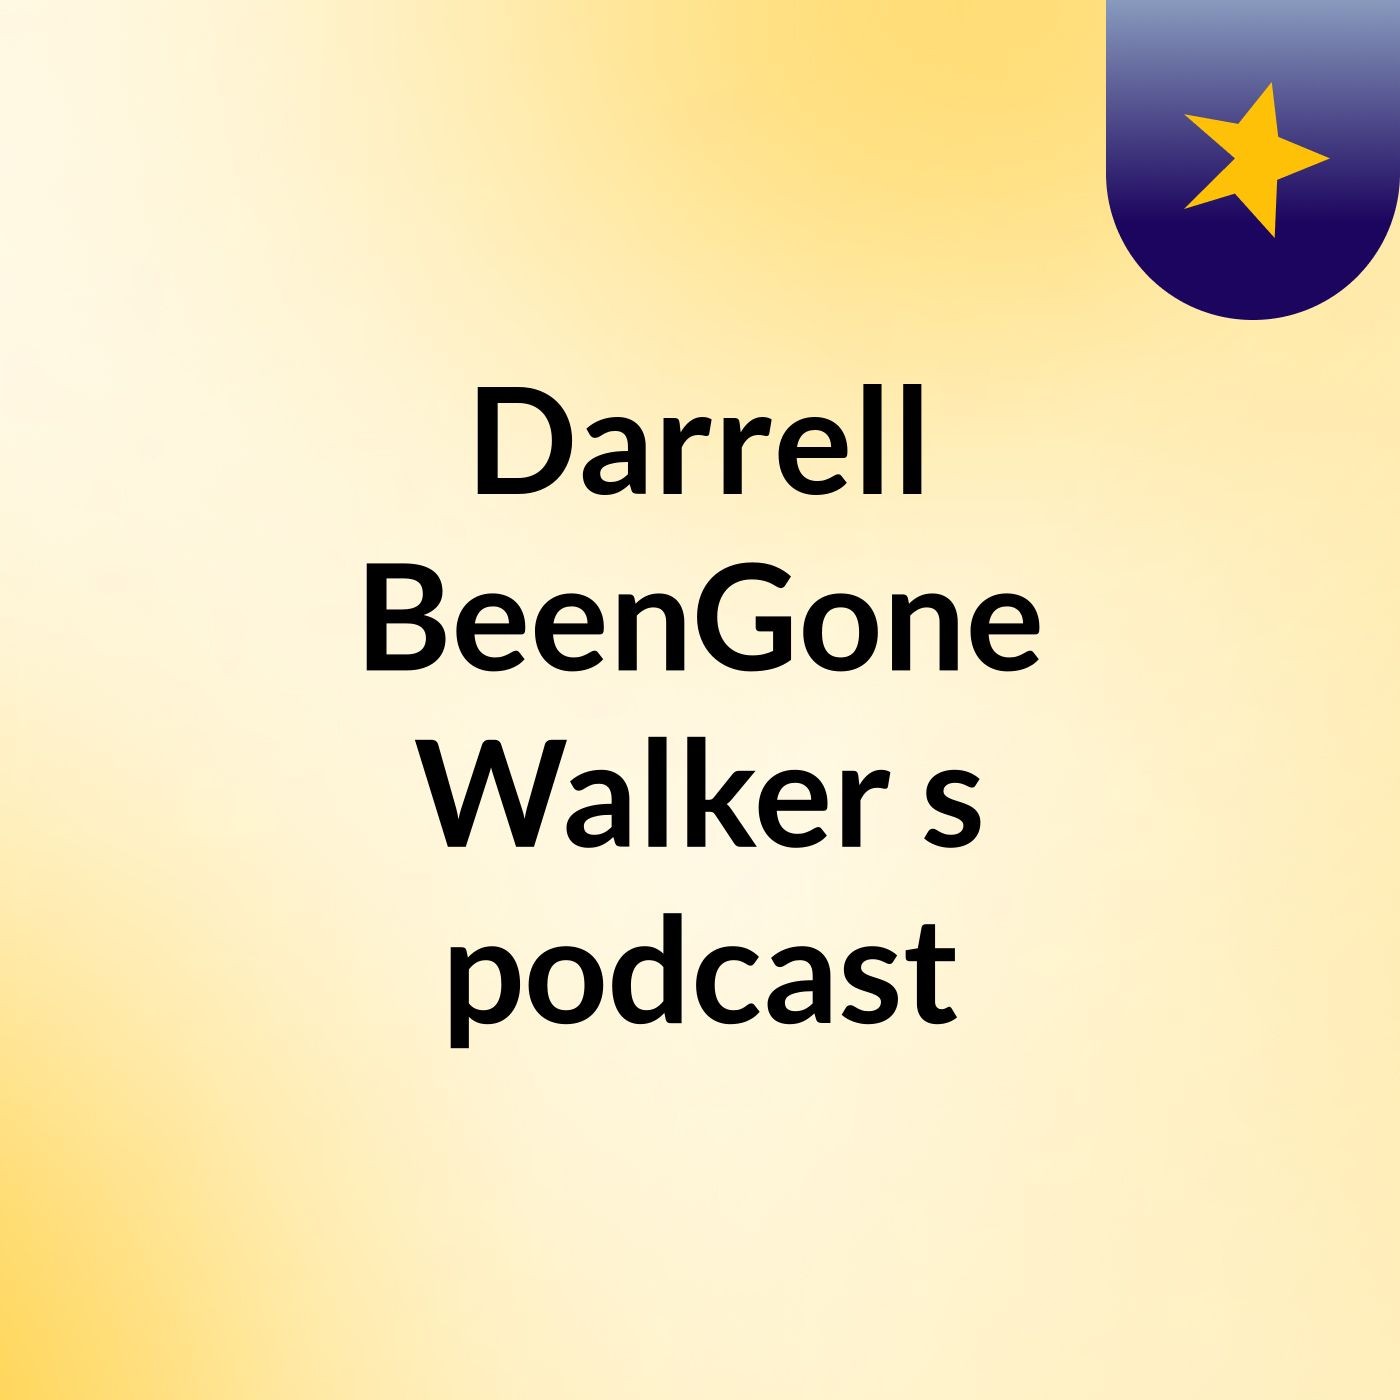 Darrell BeenGone Walker's podcast